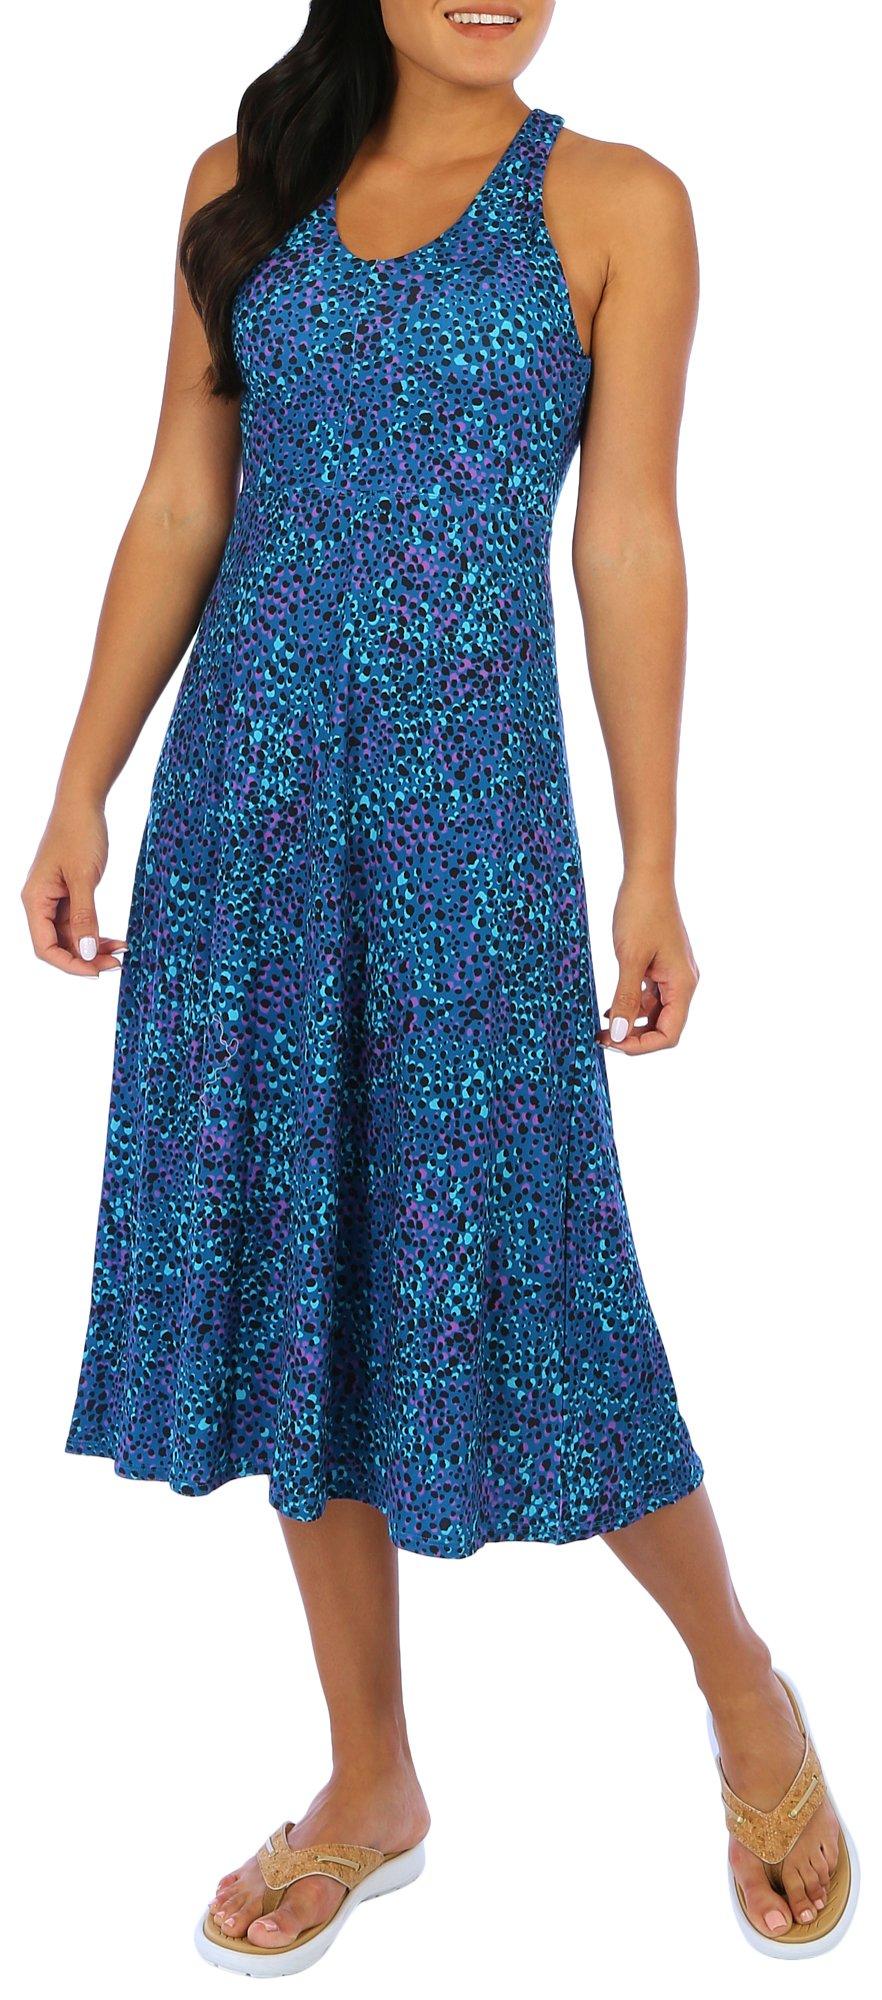 Reel Legends Womens Spotted Sleeveless V-Neck Knit Dress